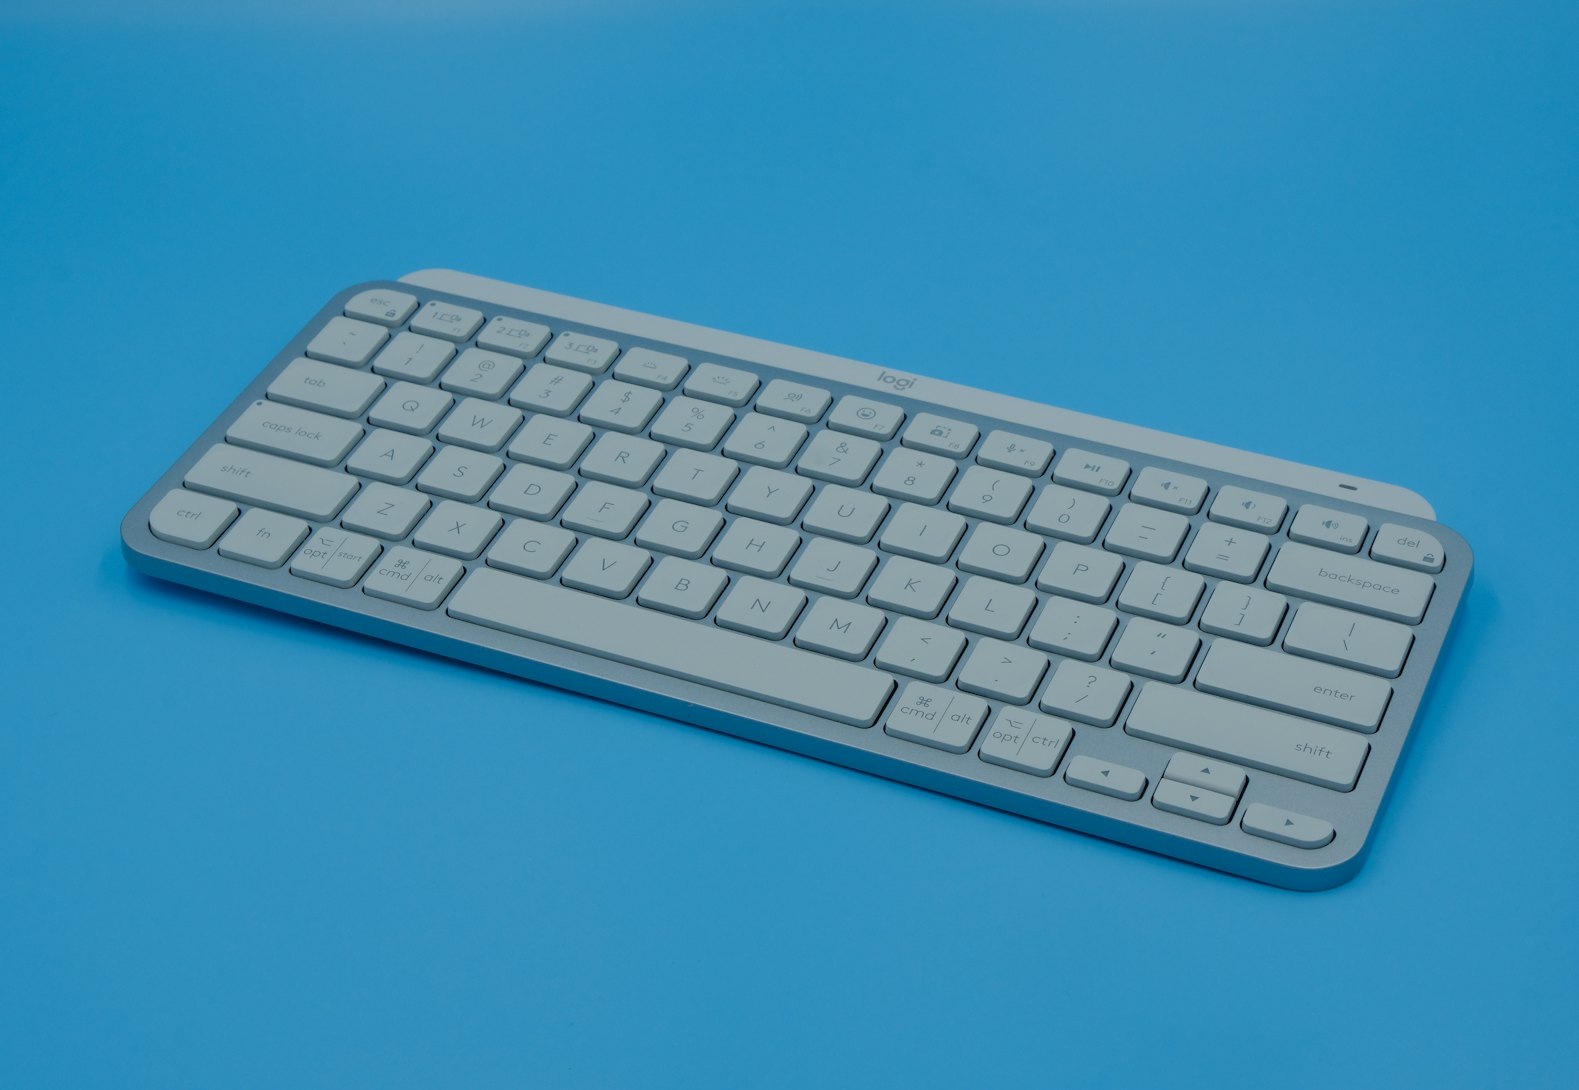 Logitech MX Keys Mini review, a better keyboard than Apple's Magic Keyboard